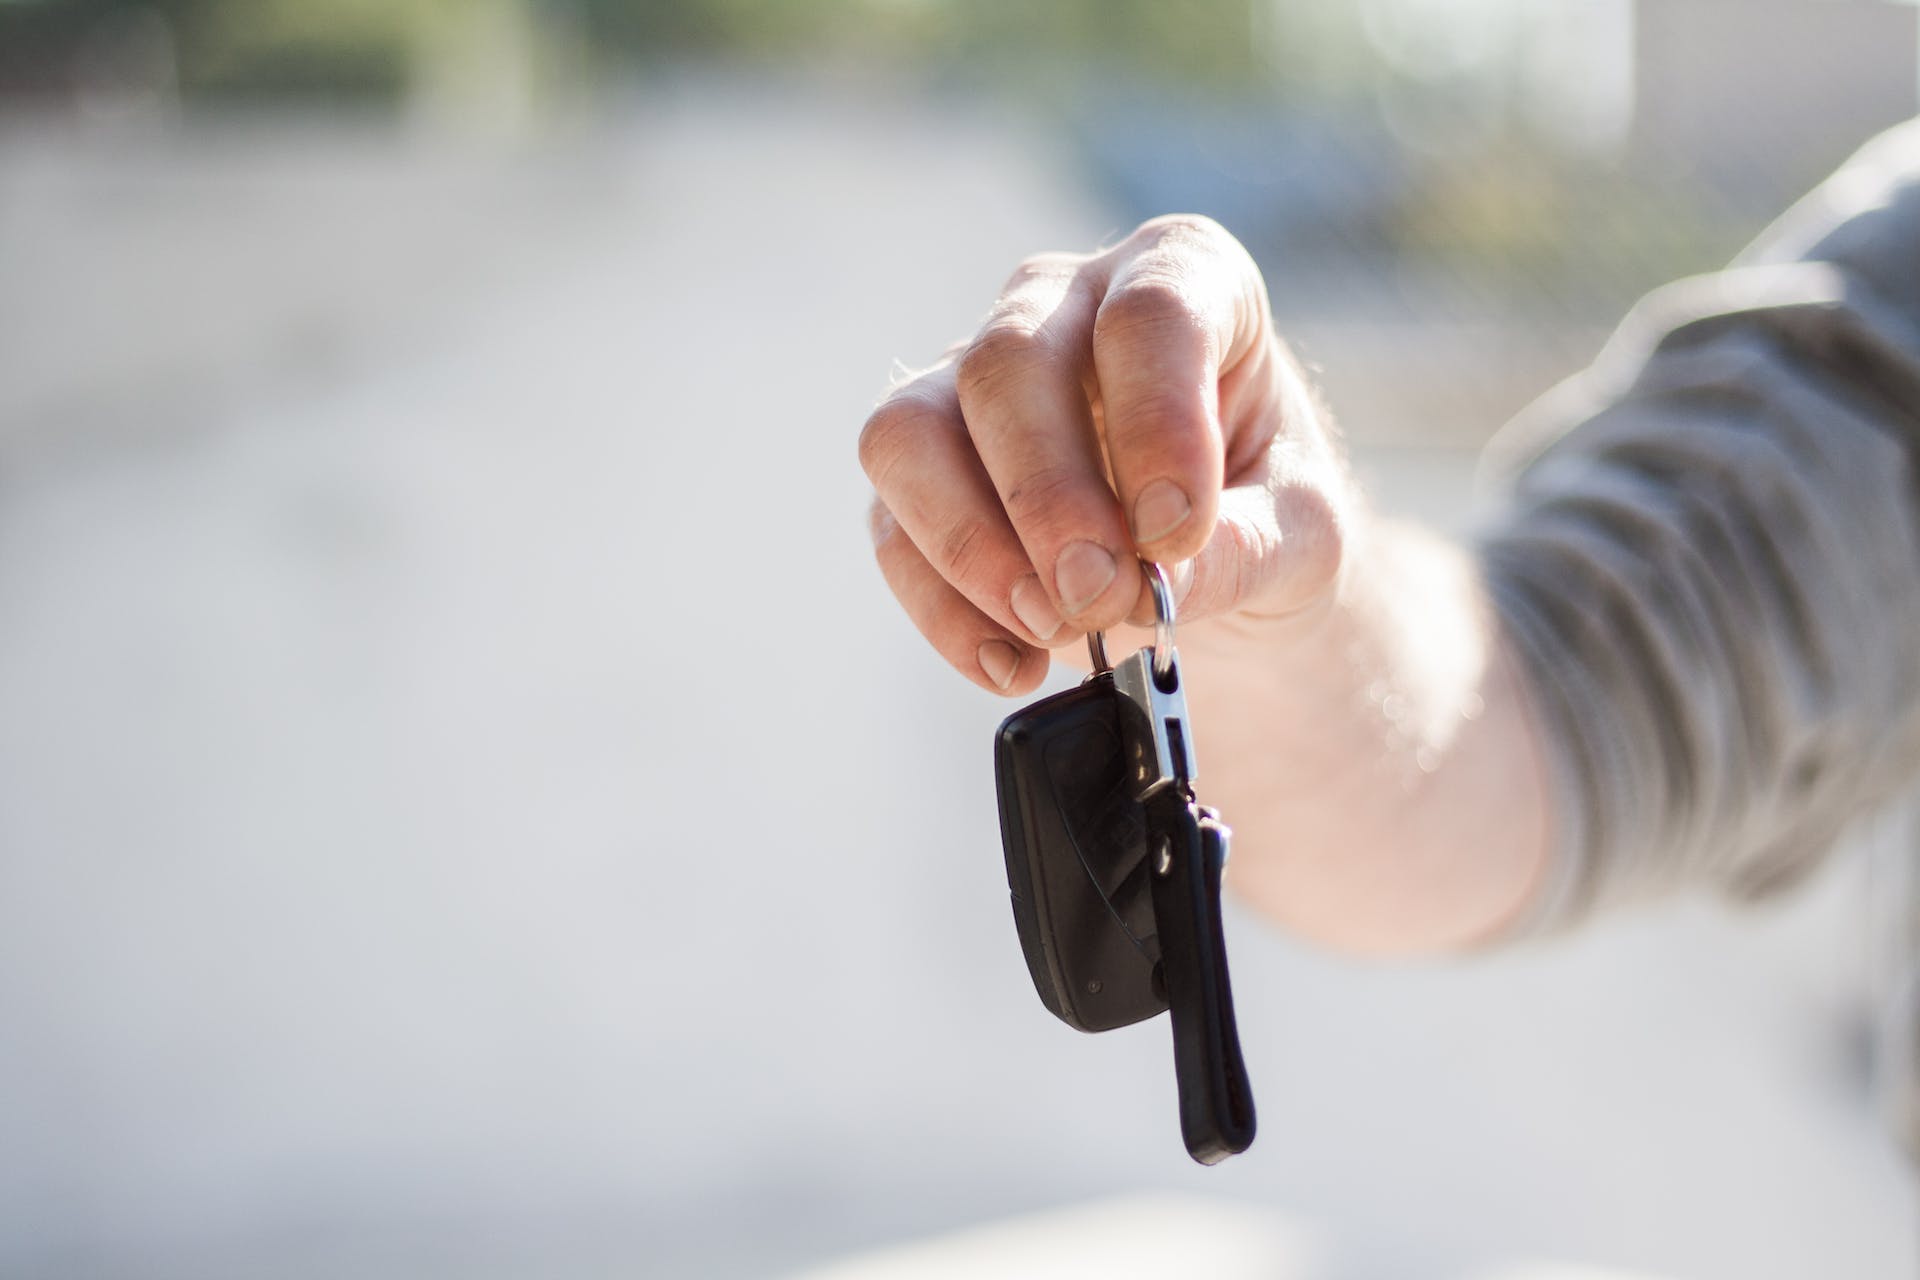 A person holding car keys.